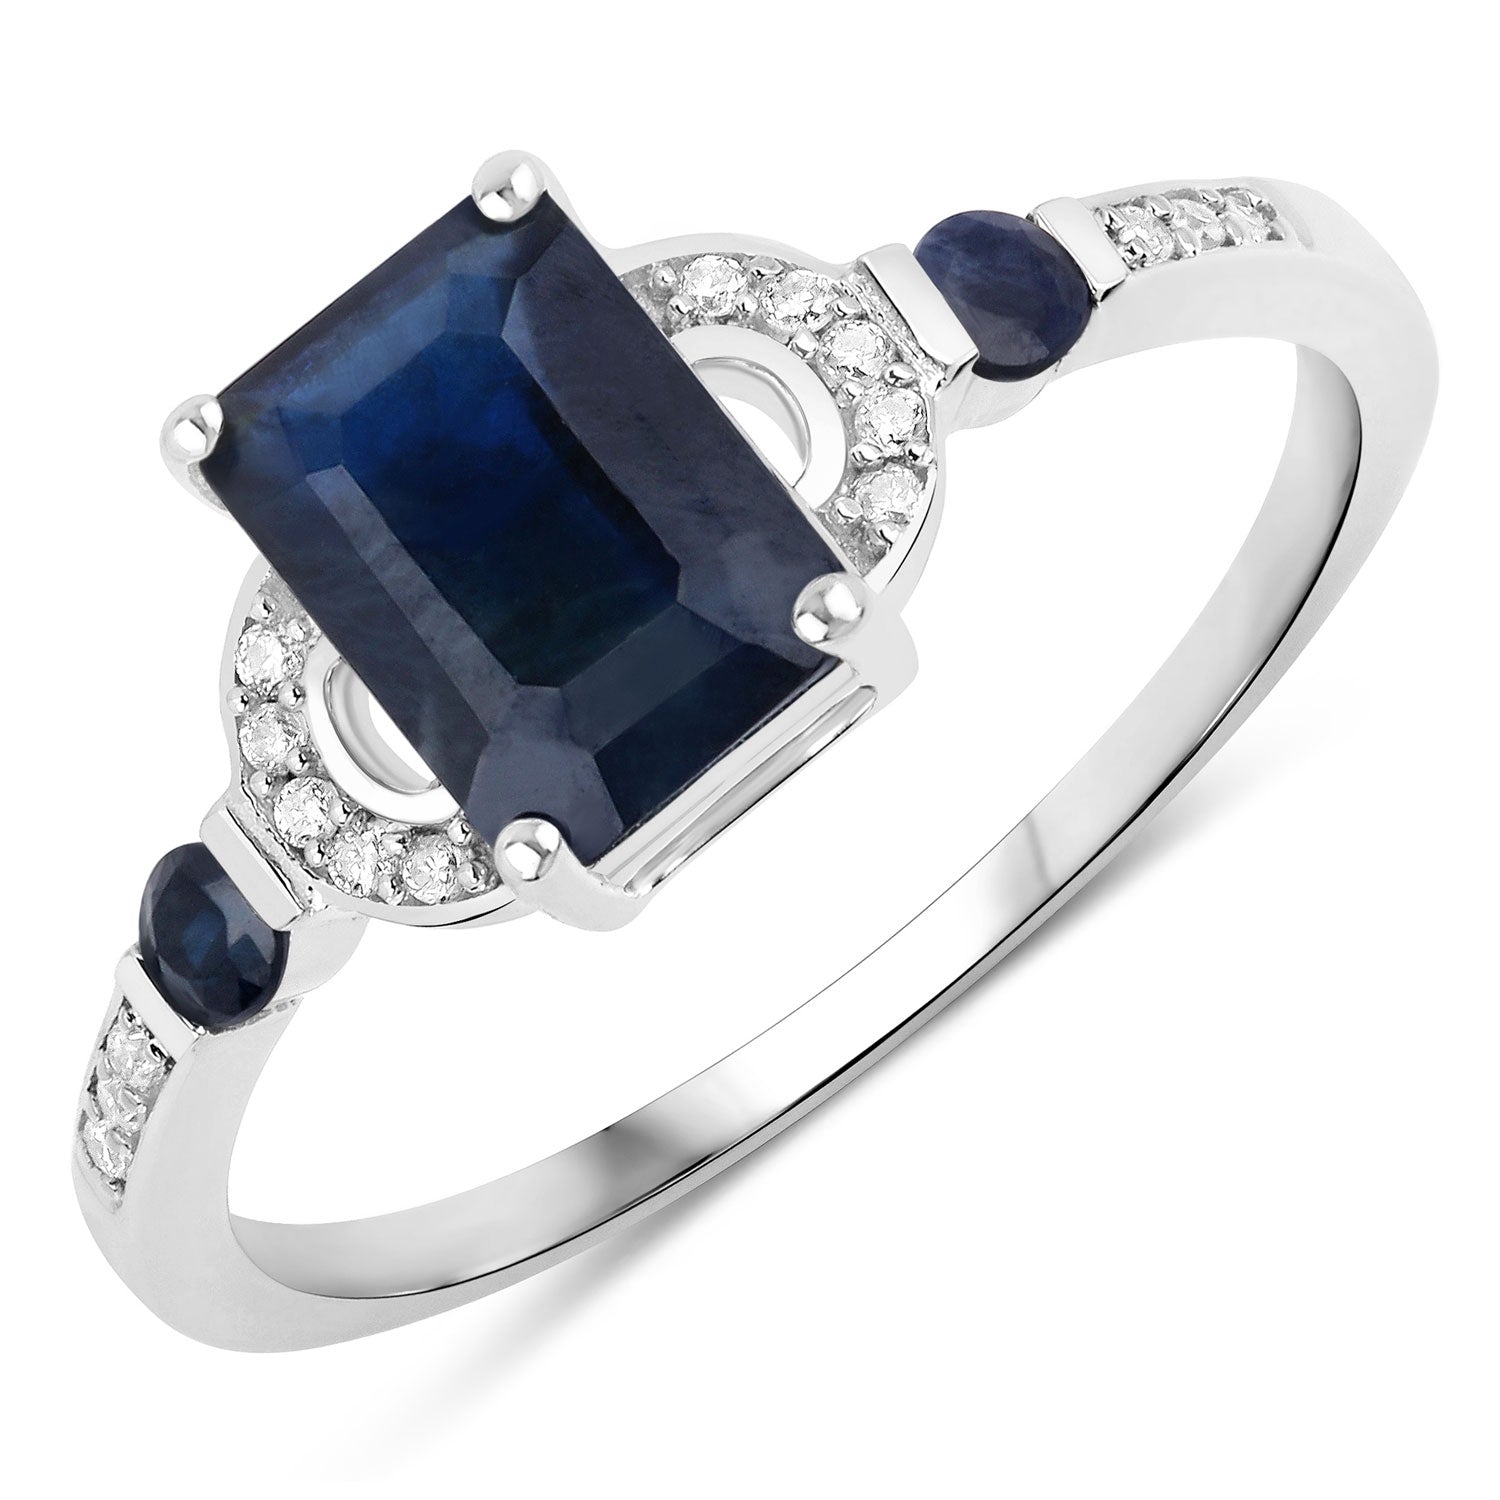 1.64 Carat Genuine Blue Sapphire and White Diamond 14K White Gold Ring